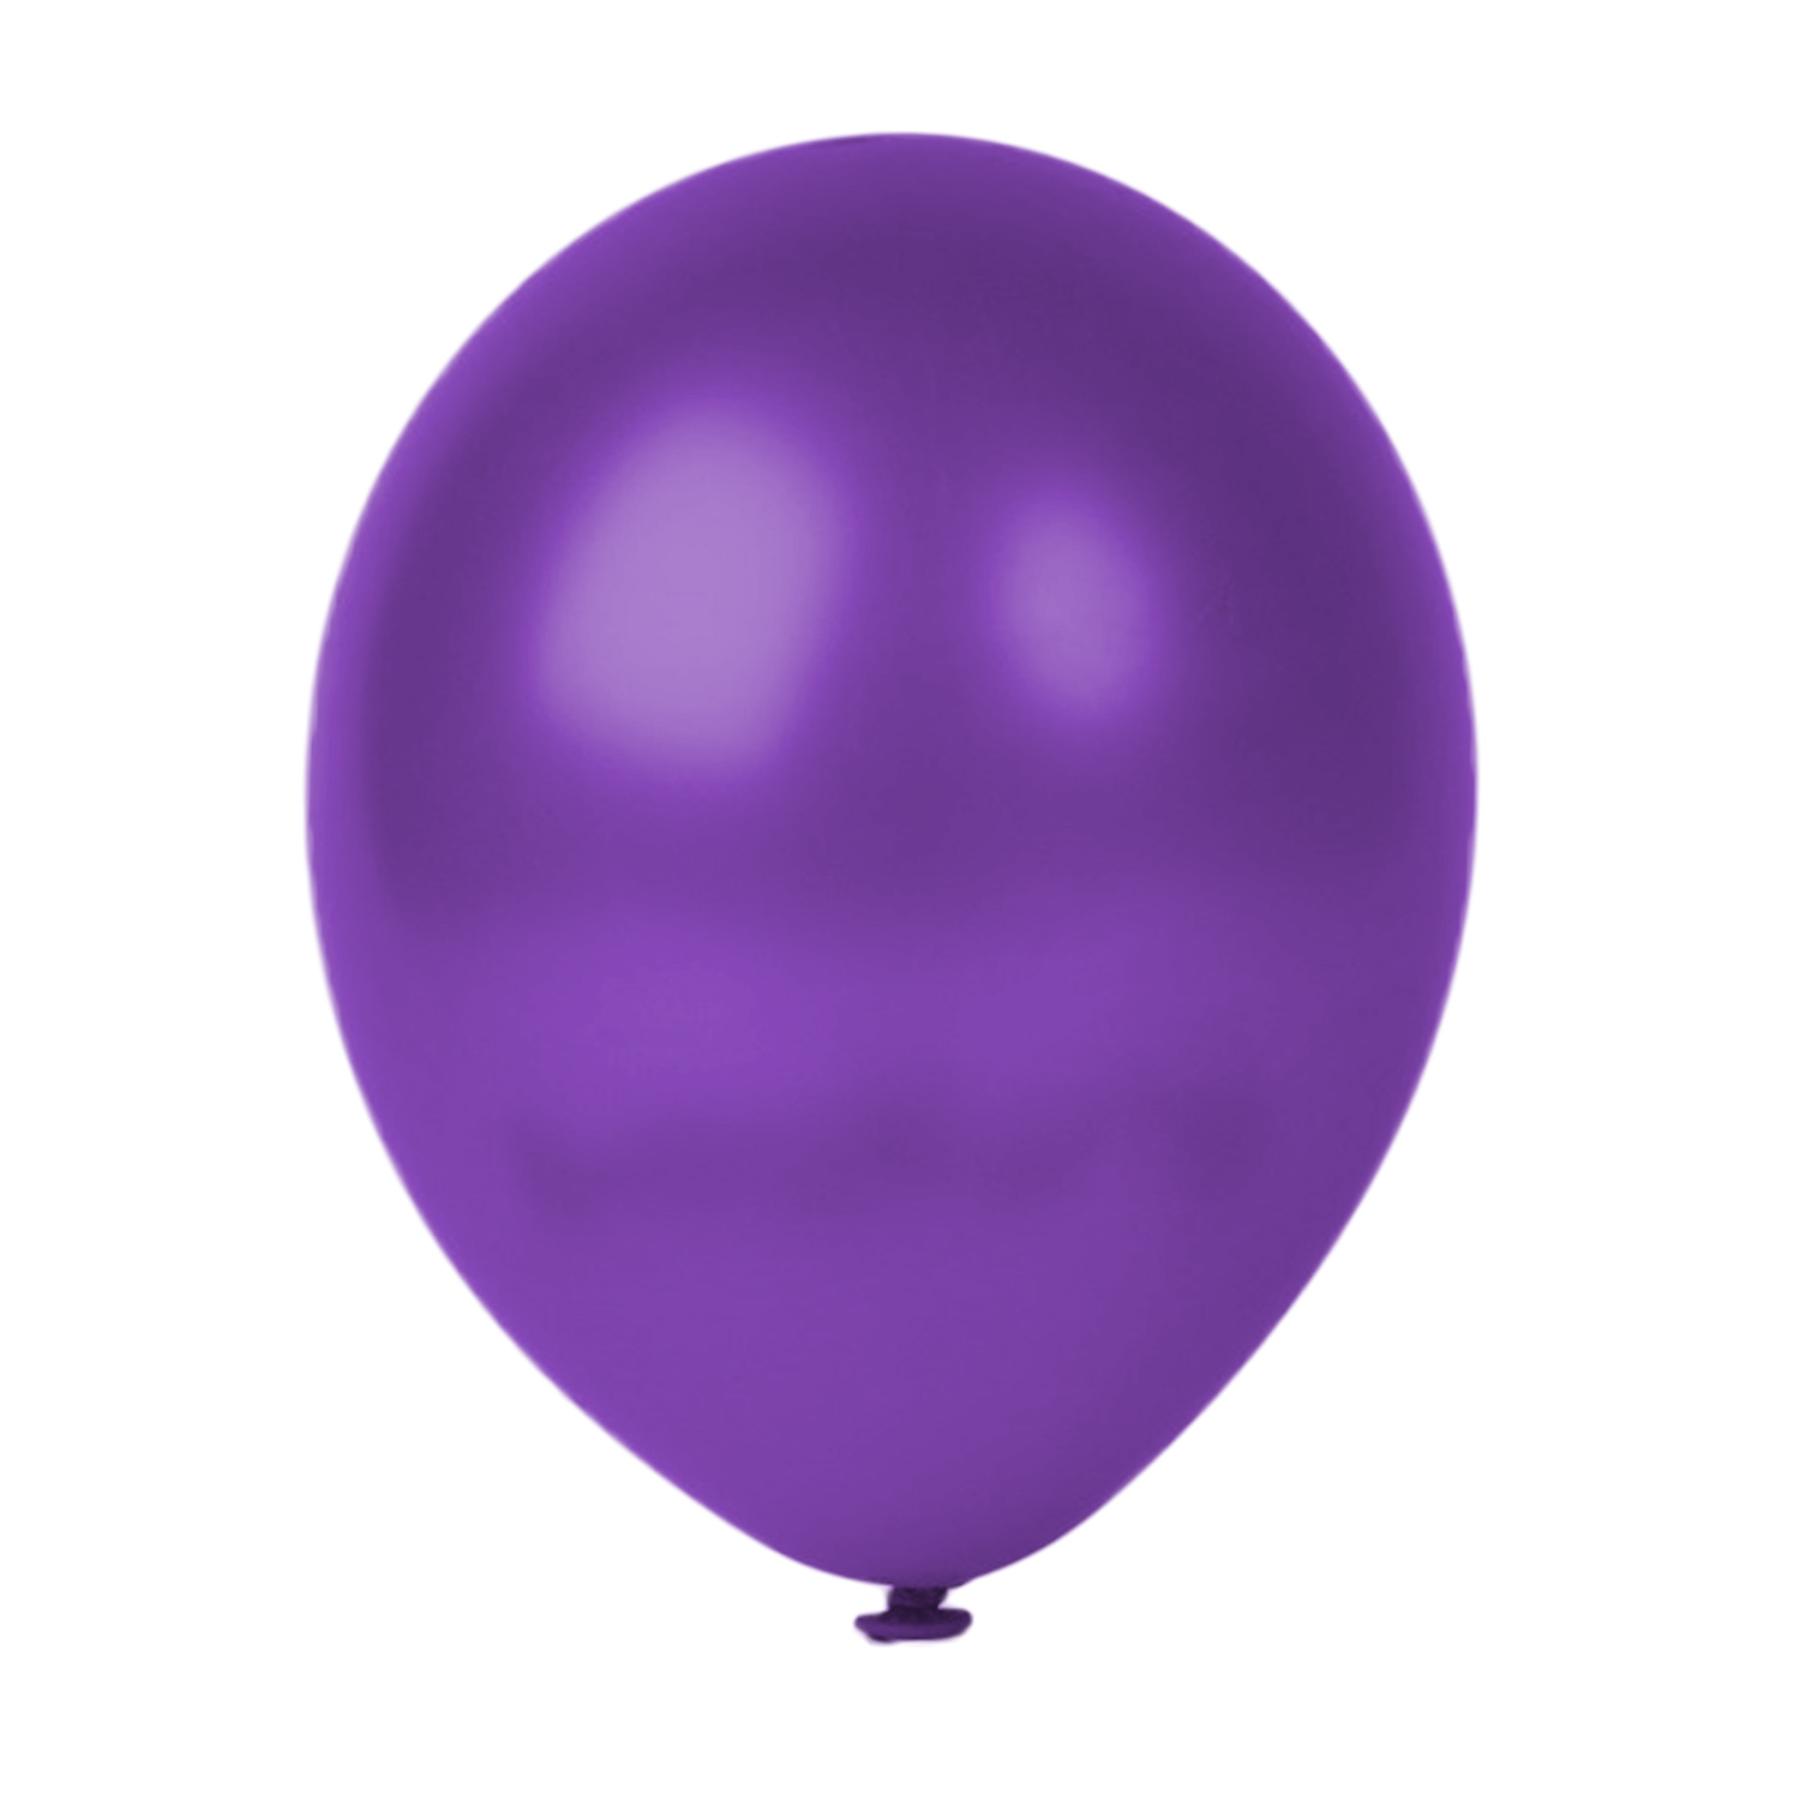 25er SET - Latex Luftballon - 12inch - Violett - Metallic (glänzend)